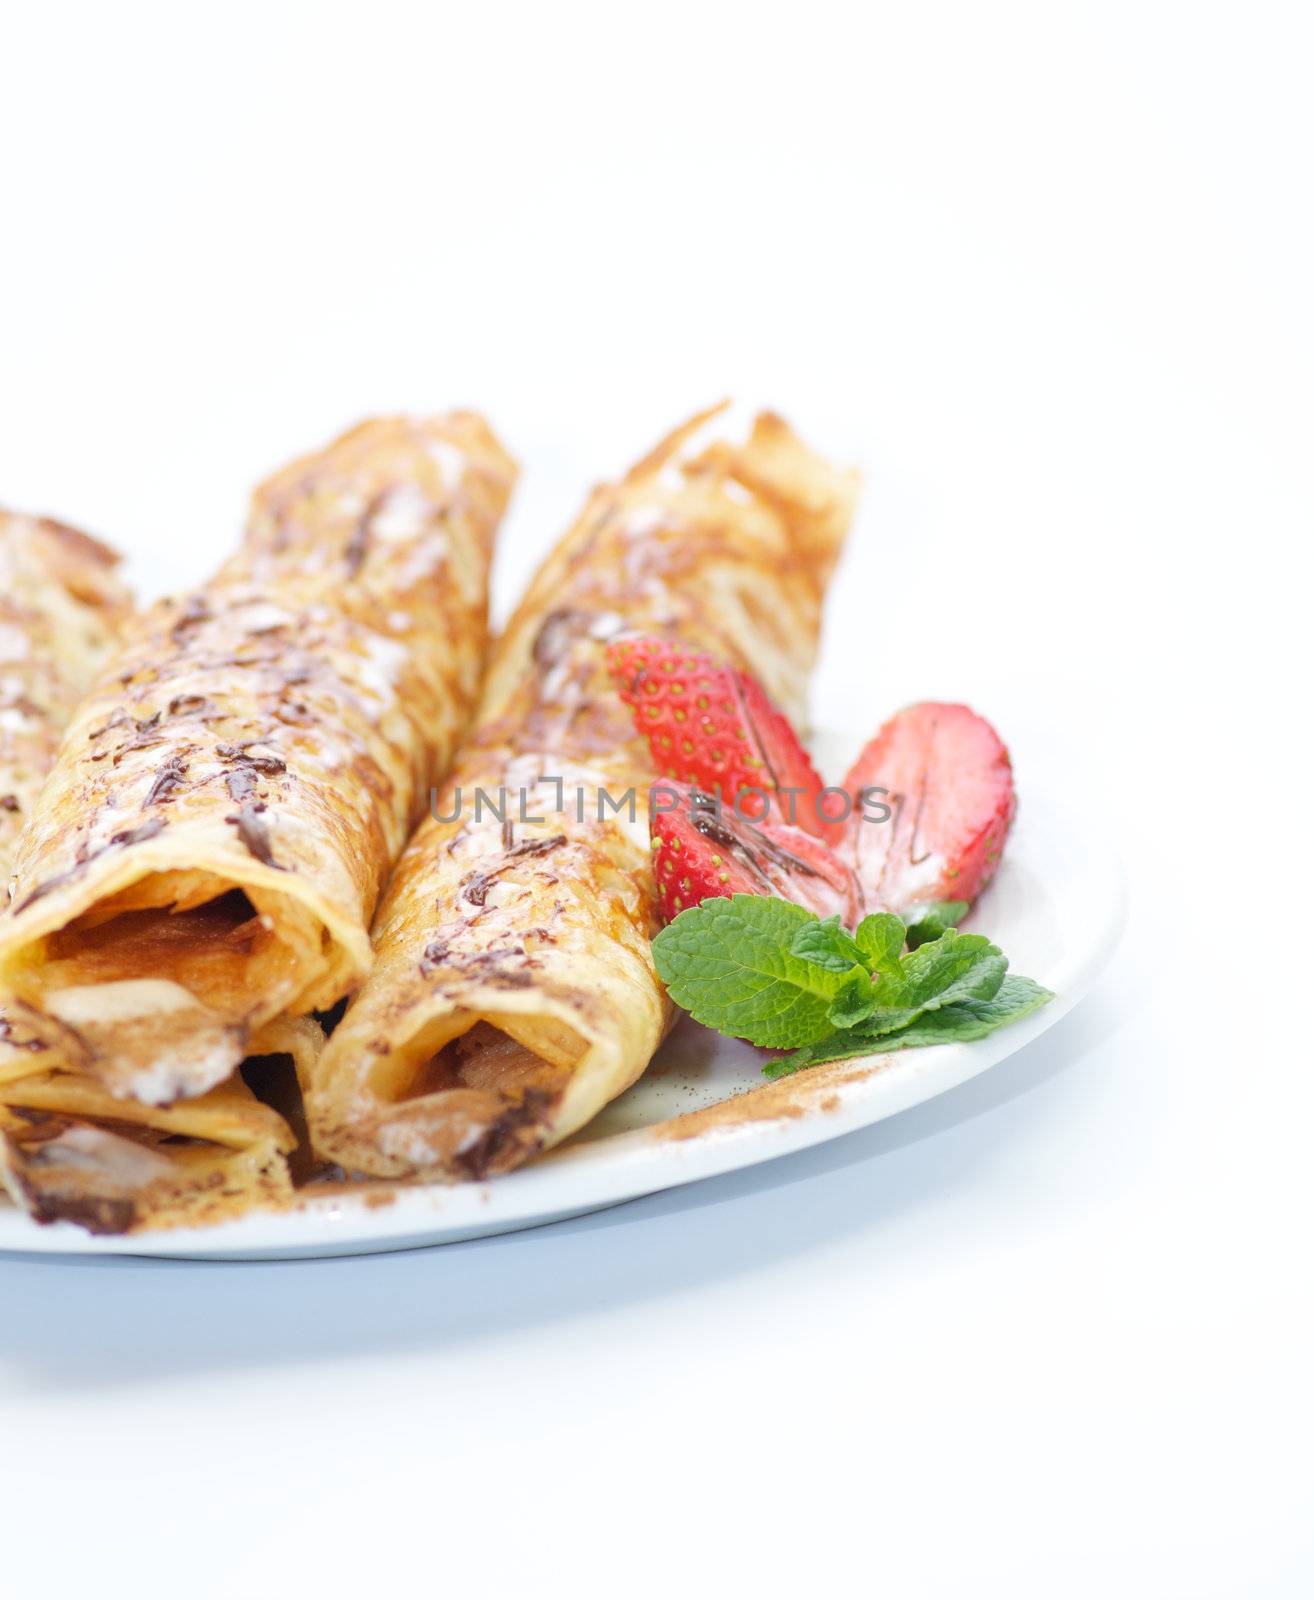 Pancake tubules with strawberry and glaze by zhekos